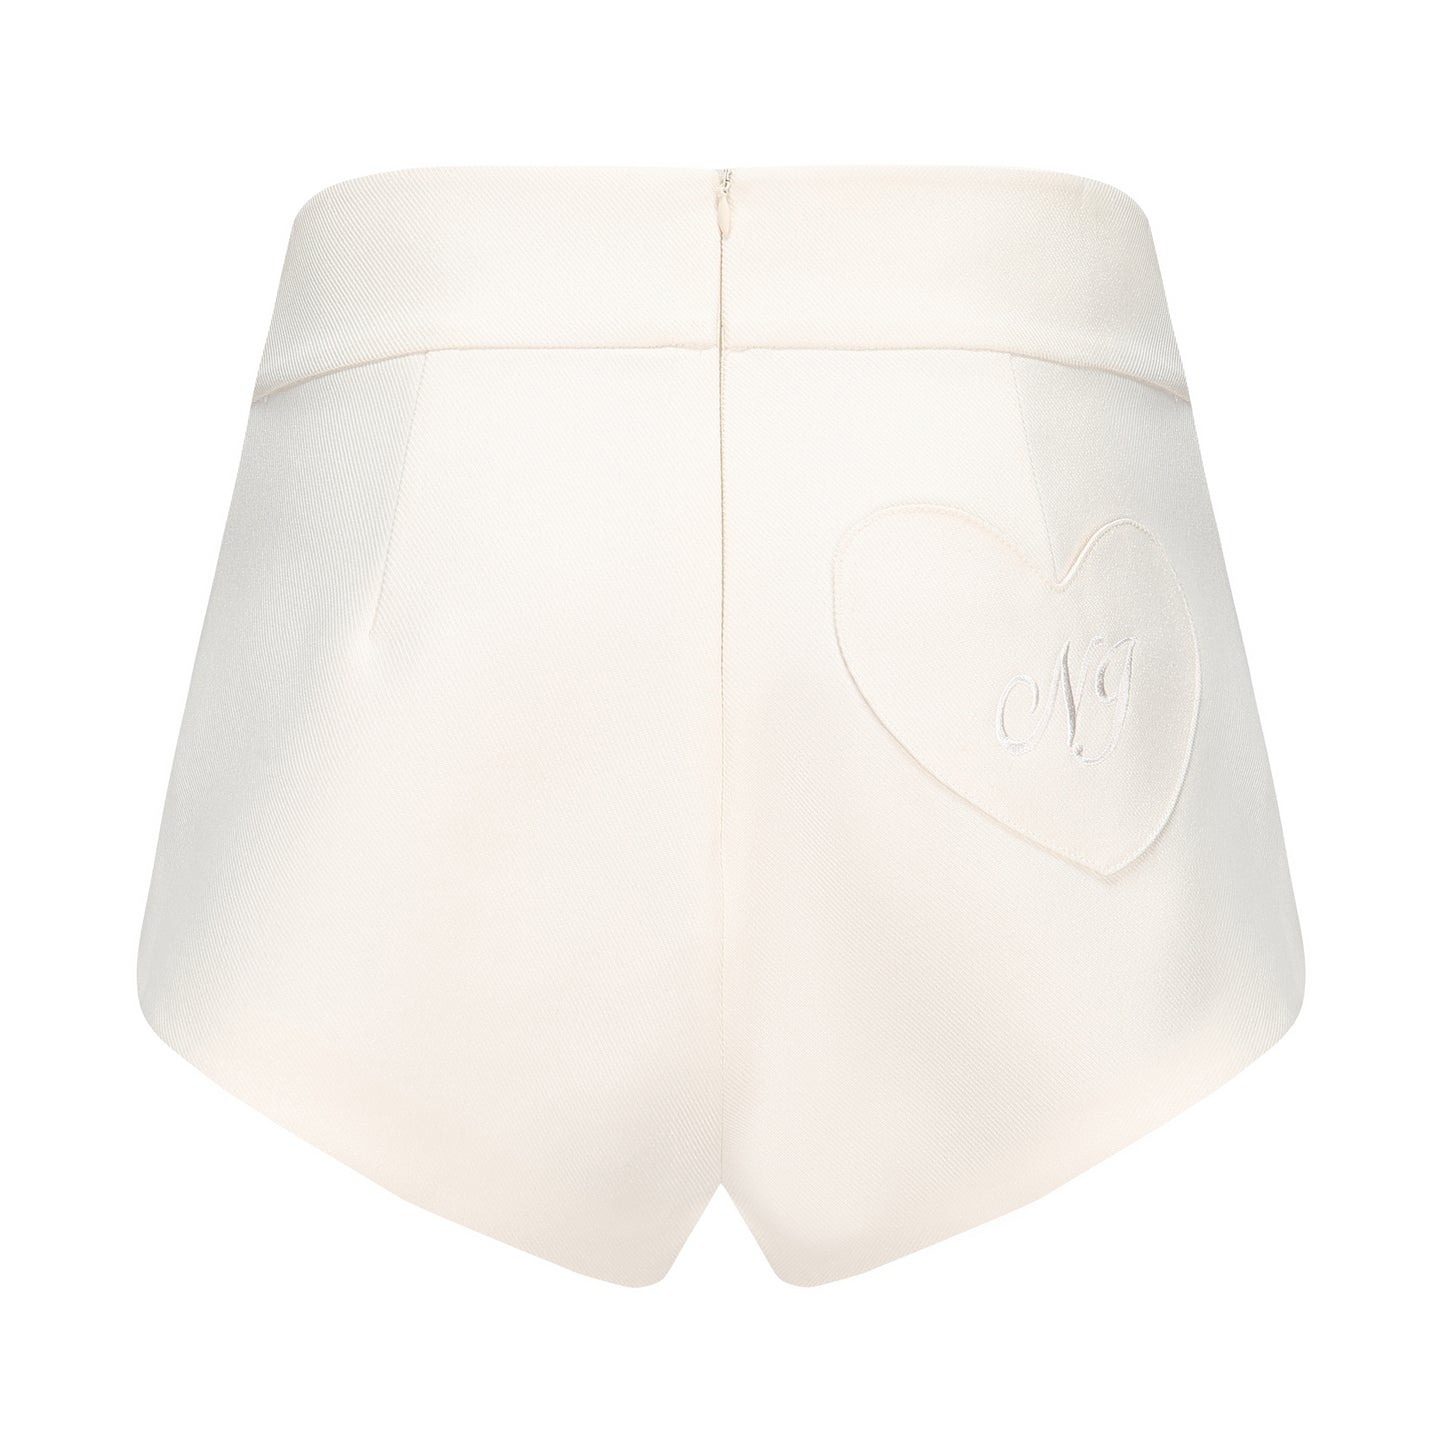 Annica Heart Shorts (White) (Final Sale)